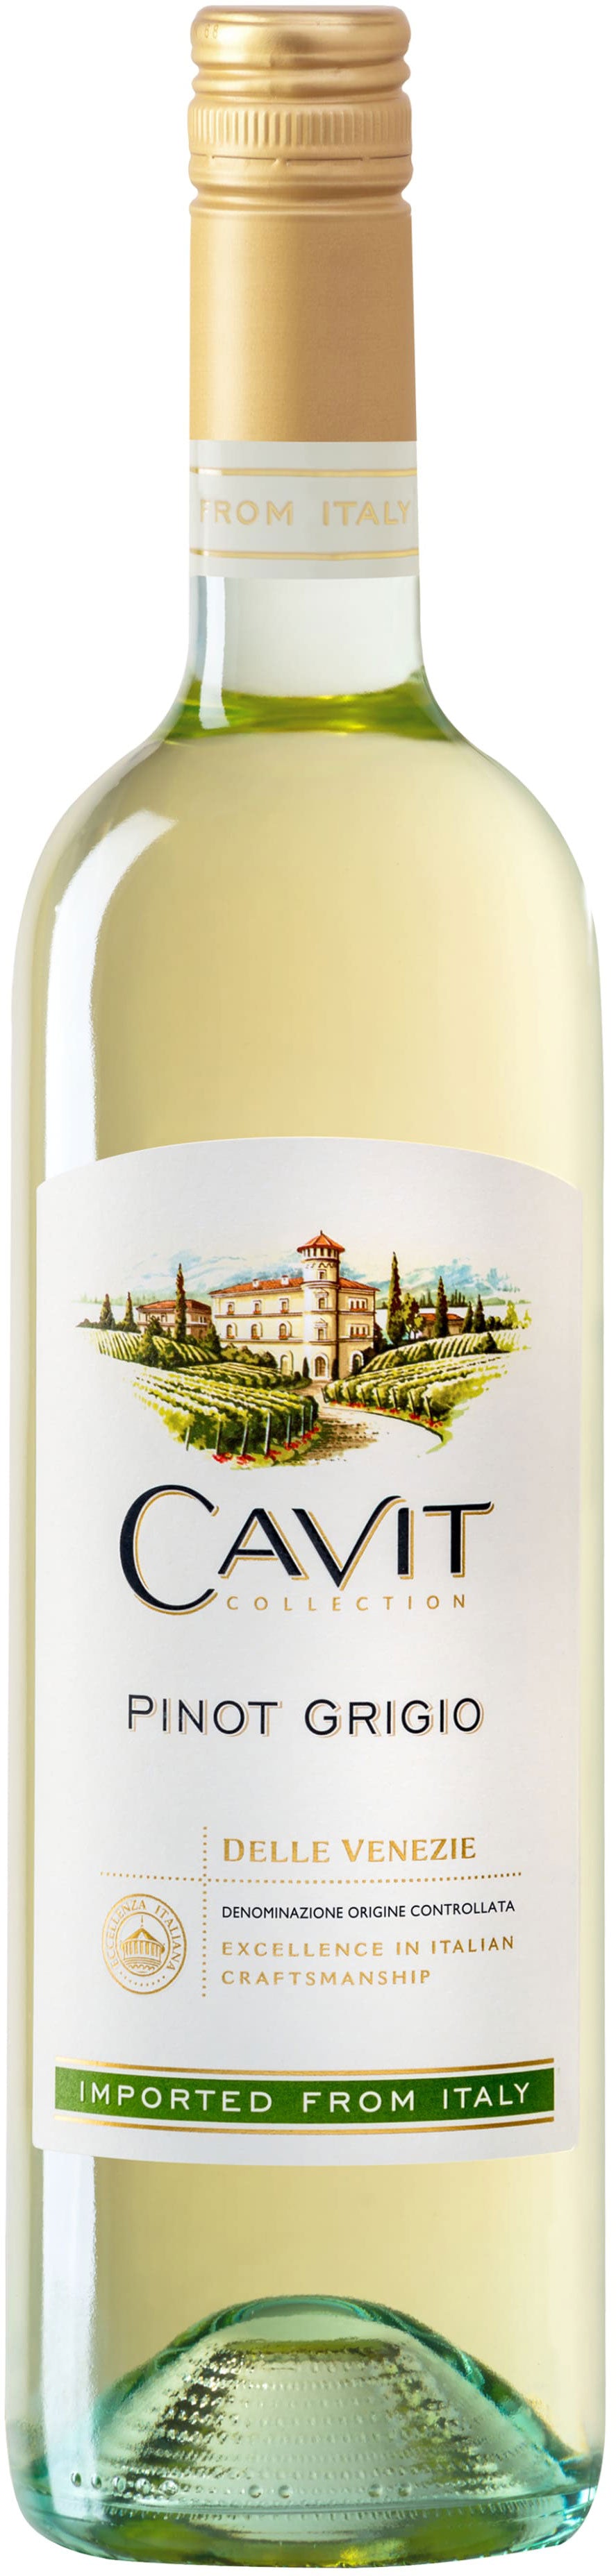 Cavit Pinot Grigio 2020